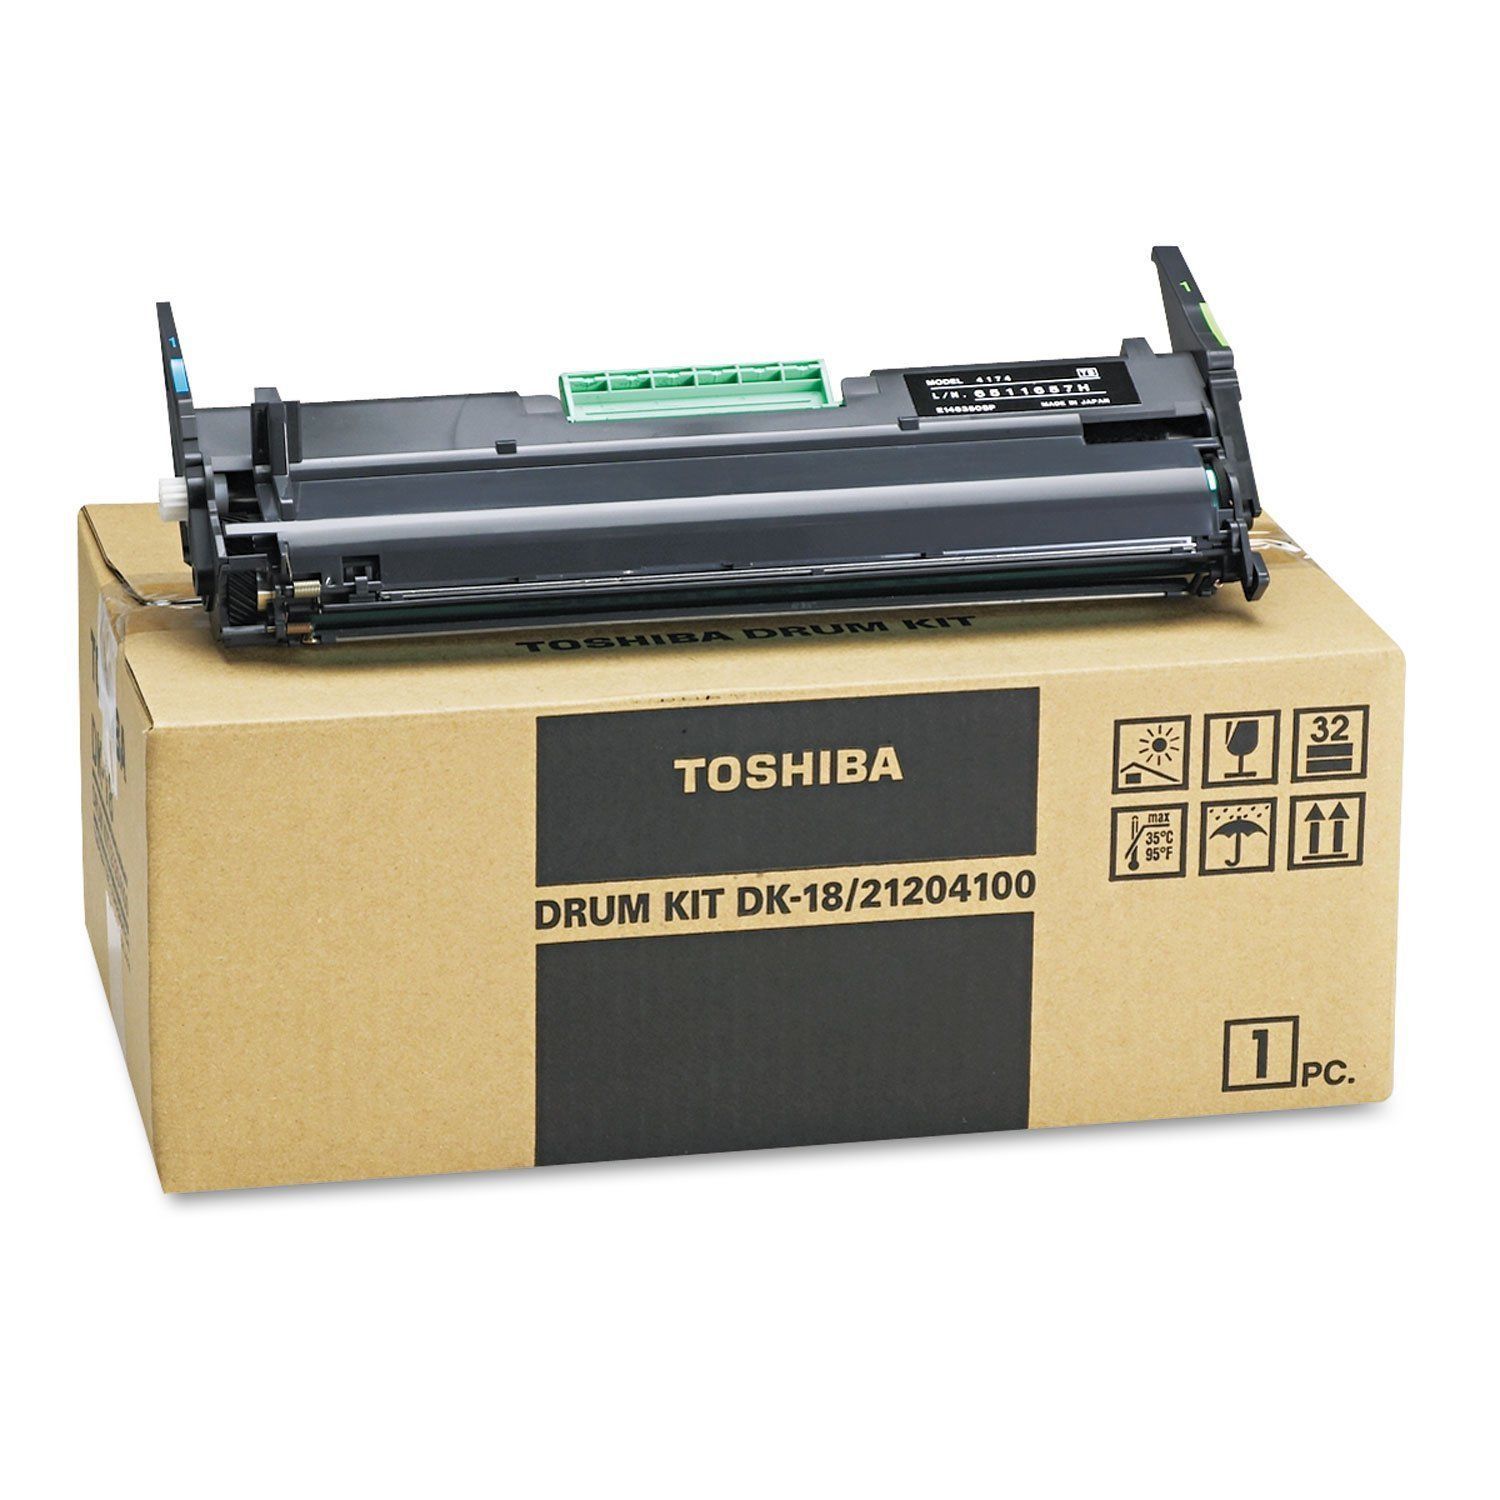 Toshiba DK18 Fax Drum Cartridge for Toshiba Models DP-80F DP-85F - $65.00